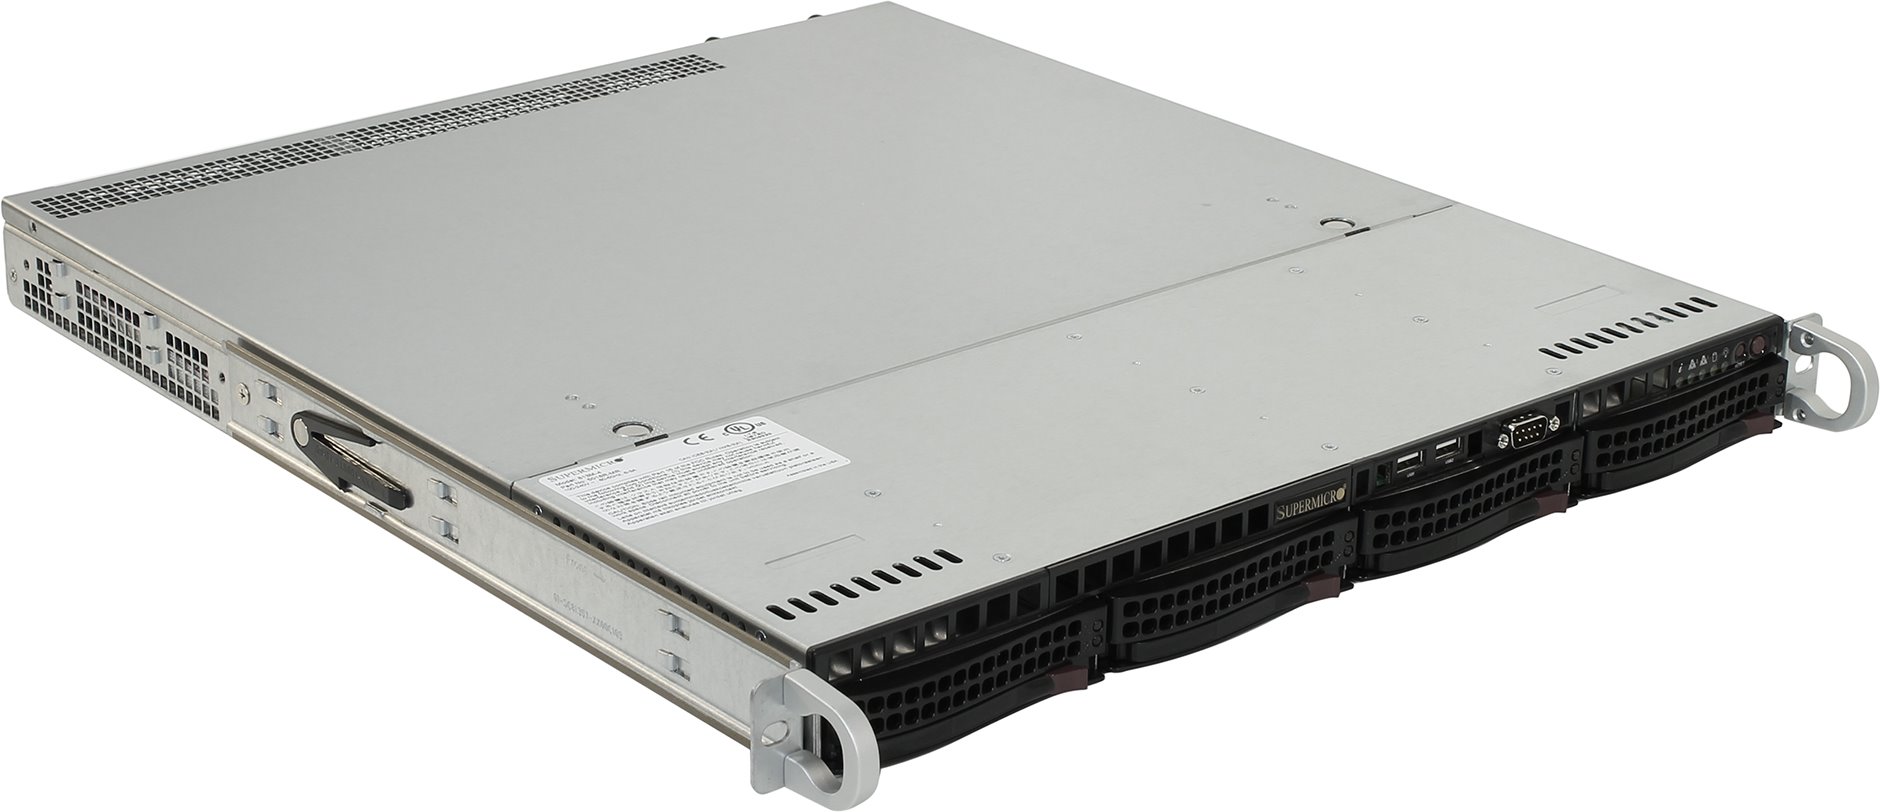 Серверная платформа SuperMicro SYS-5018GR-T, 1U, LGA2011-3, Intel C612, 8 x DDR4, 3 x 3.5" SATA, 2xGigabit Ethernet (1000 Мбит/с), 1400 Вт